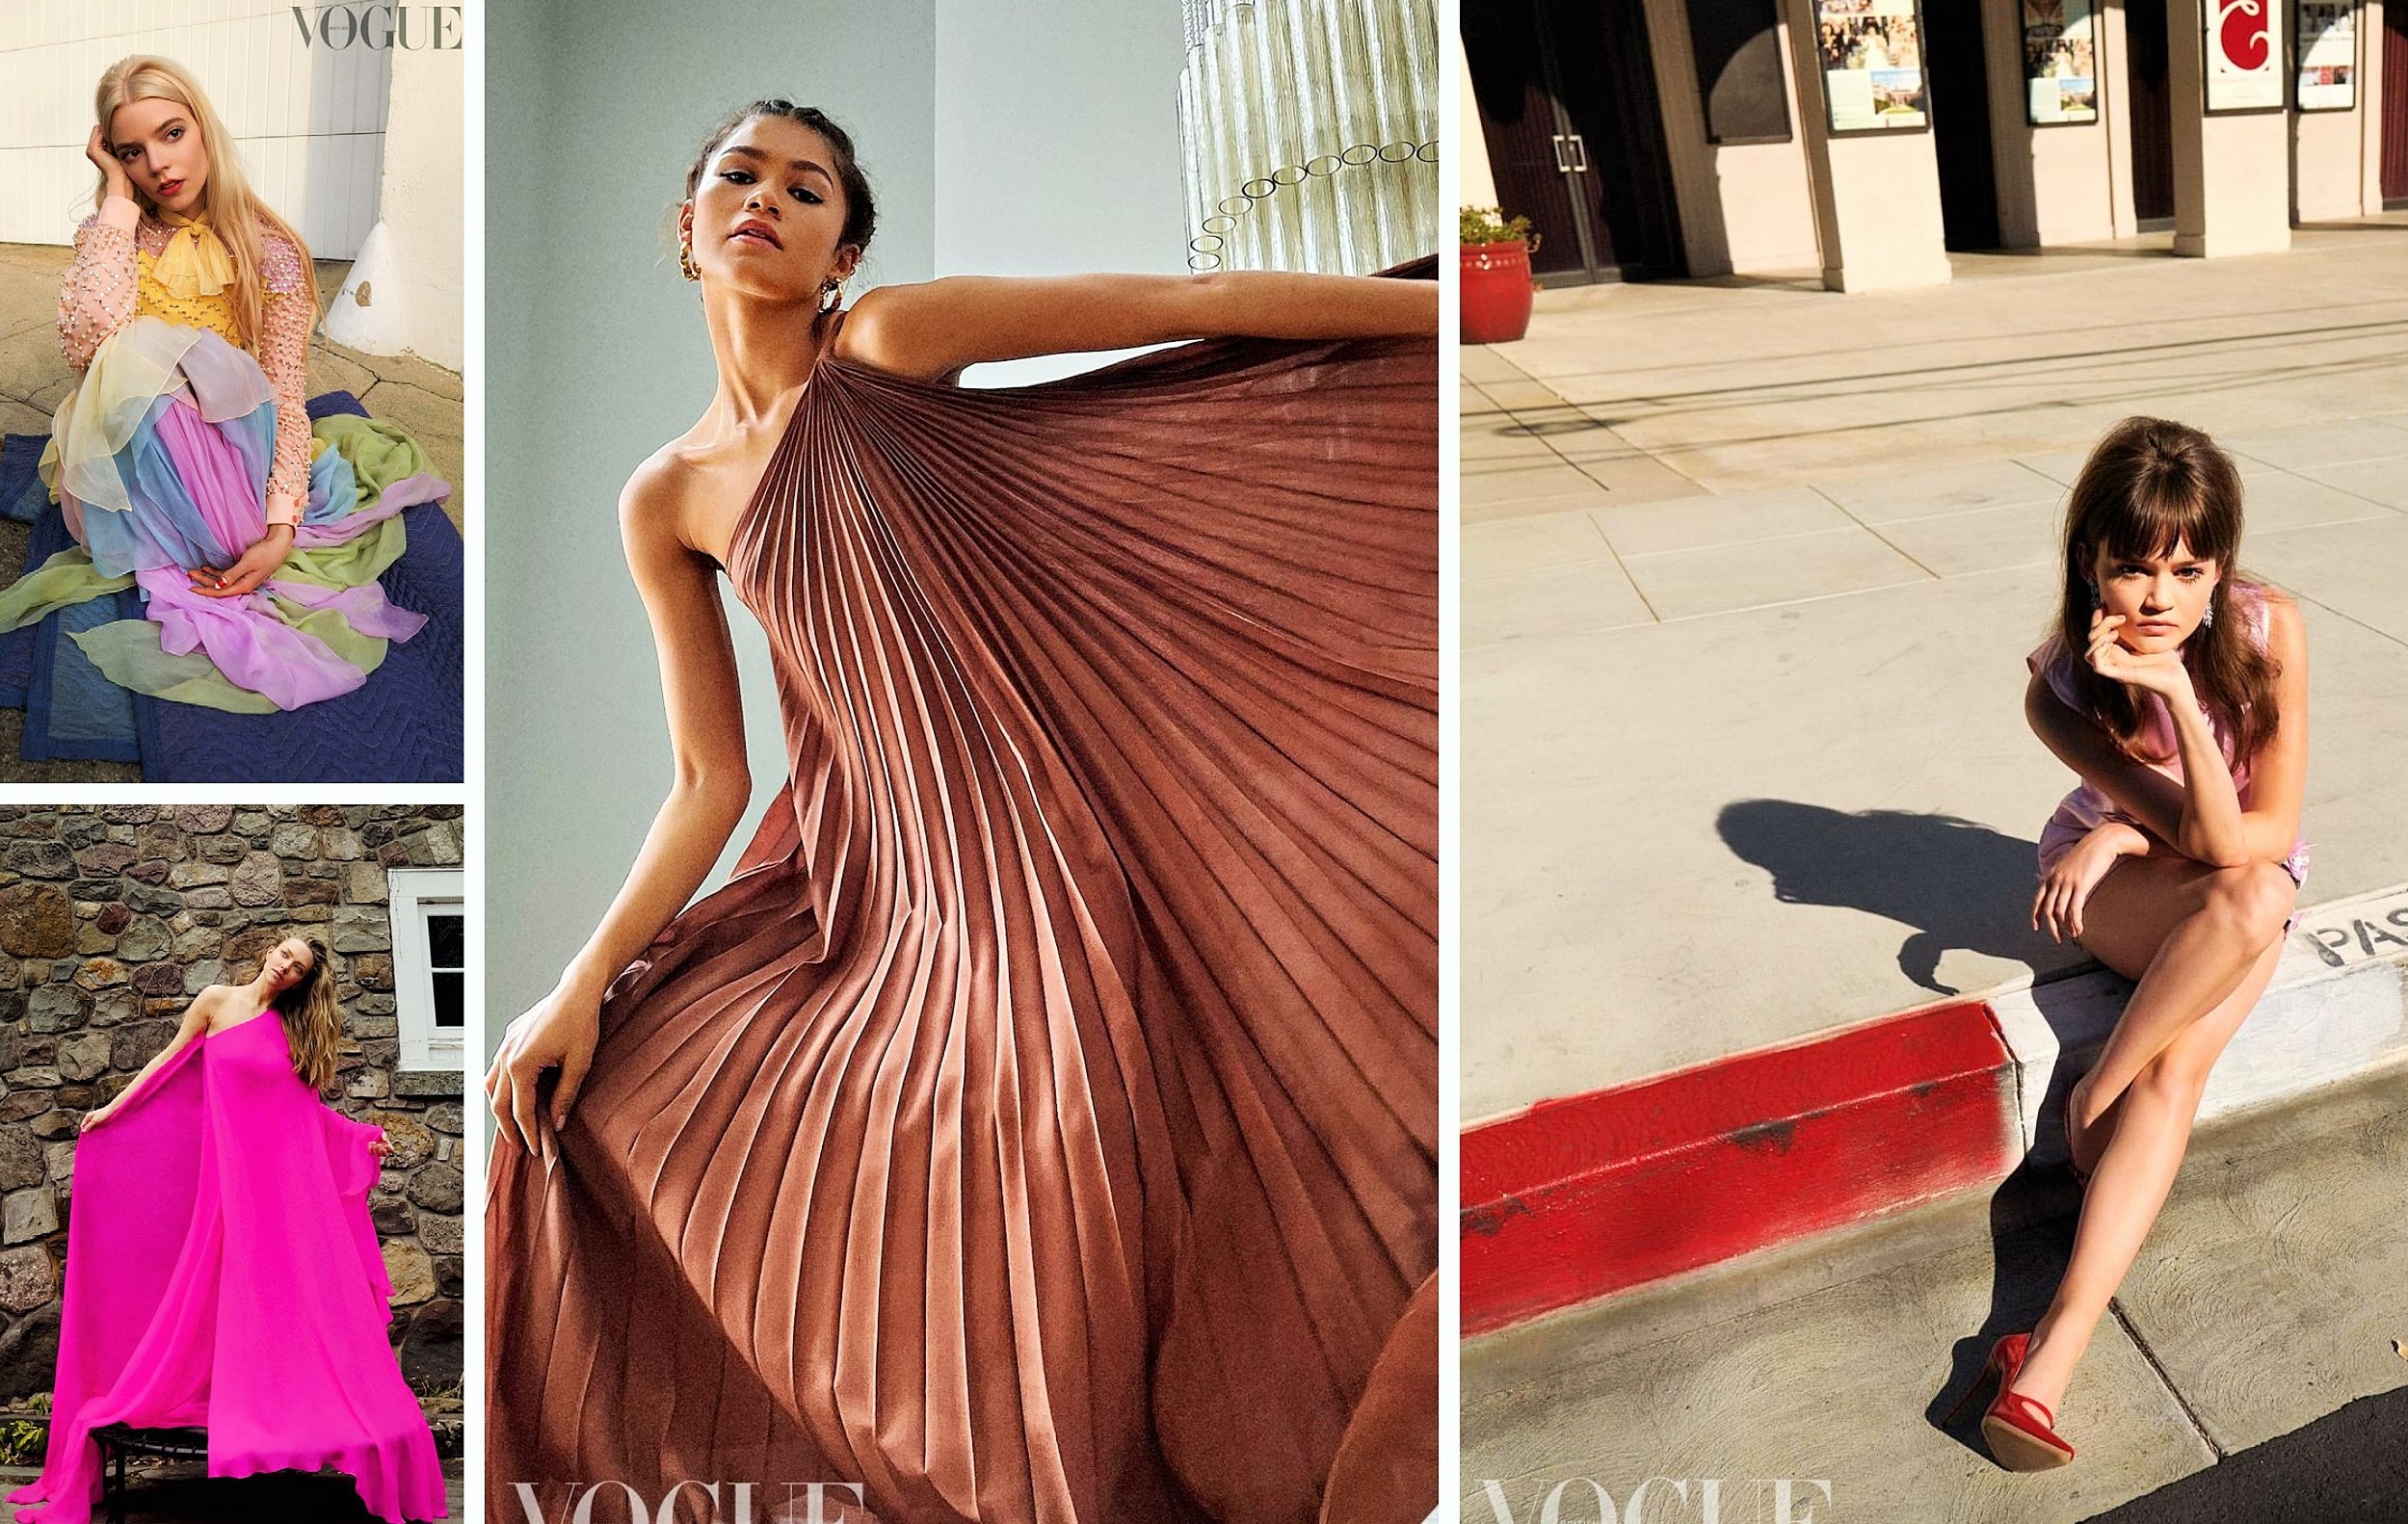 Amanda Seyfried Vogue Magazine Photoshoot Wallpapers